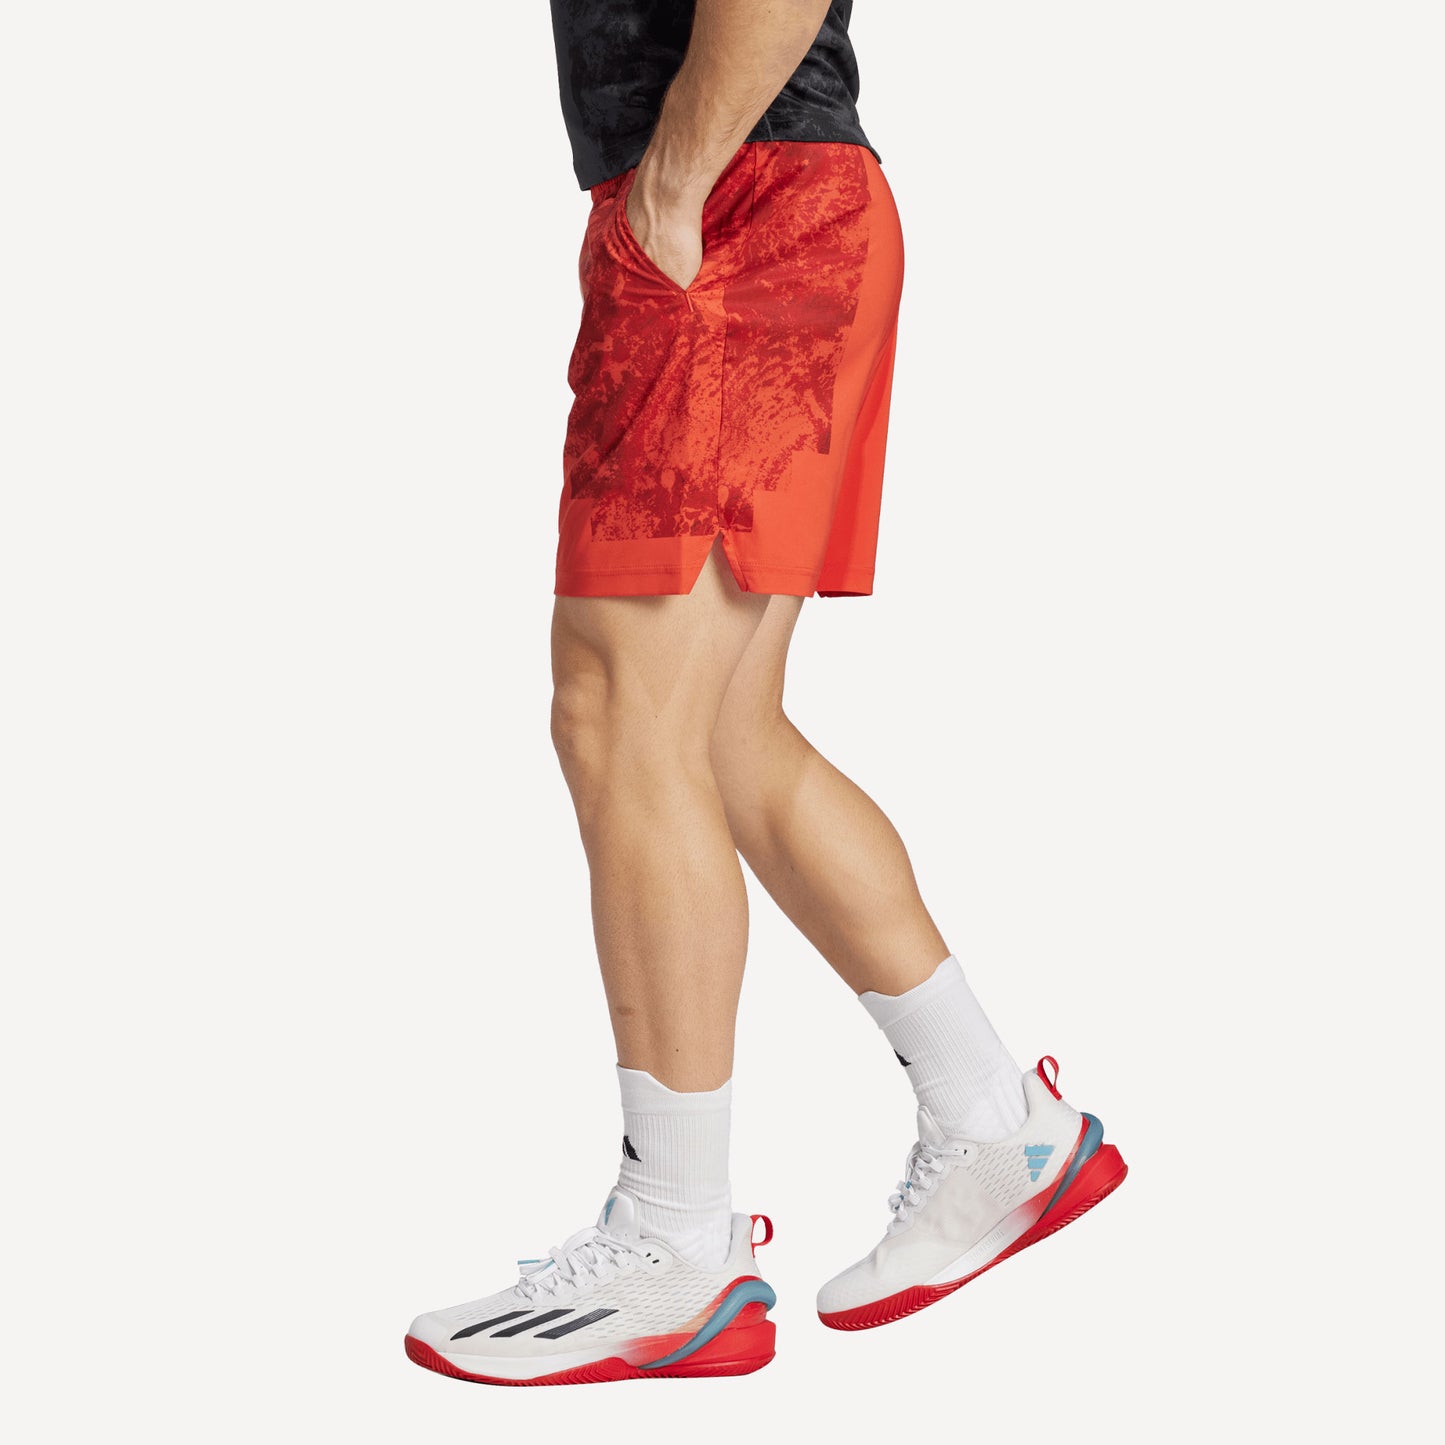 adidas Paris Ergo Men's 7-Inch Tennis Shorts Red (3)